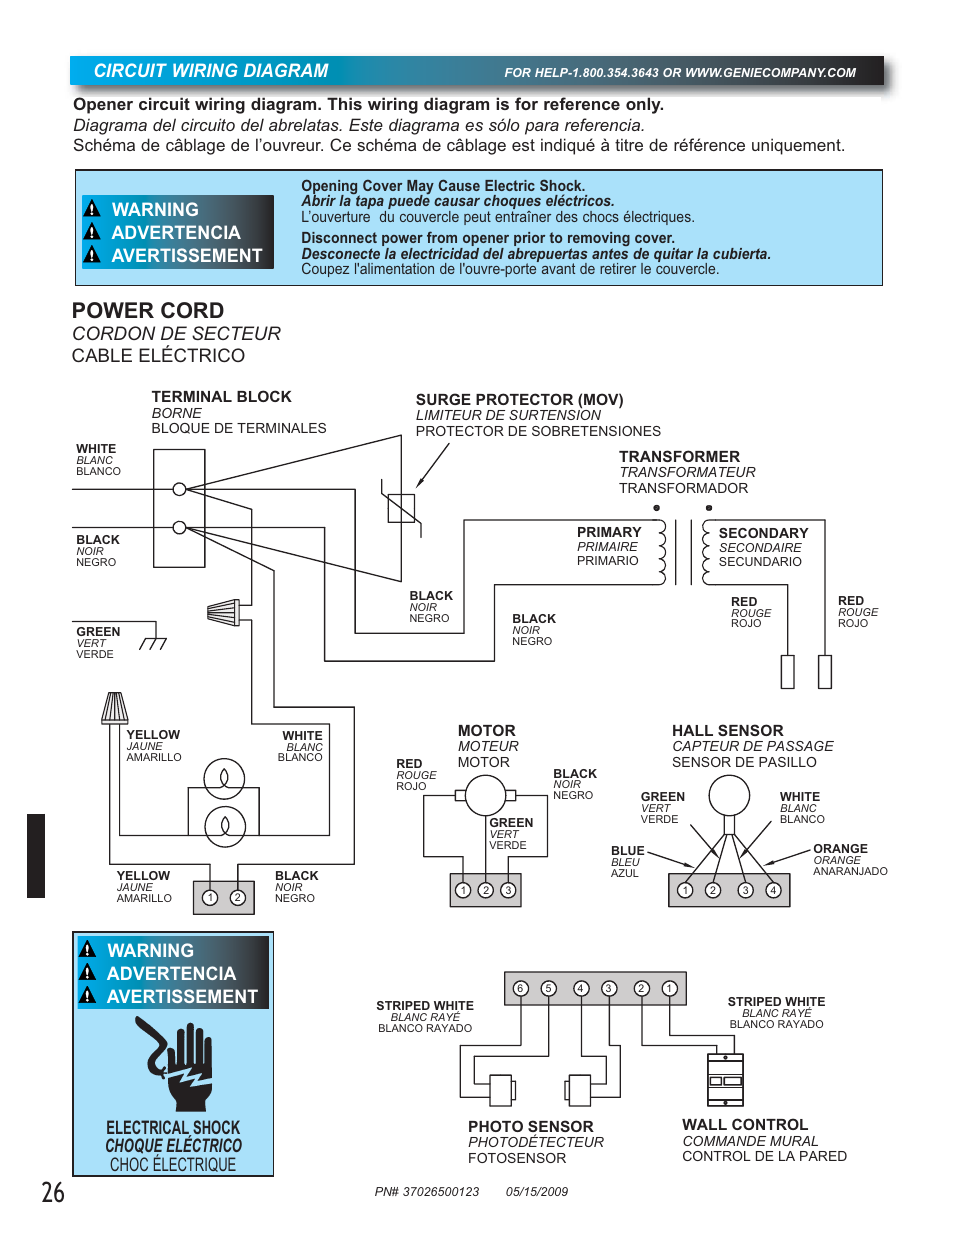 Power Cord Circuit Wiring Diagram